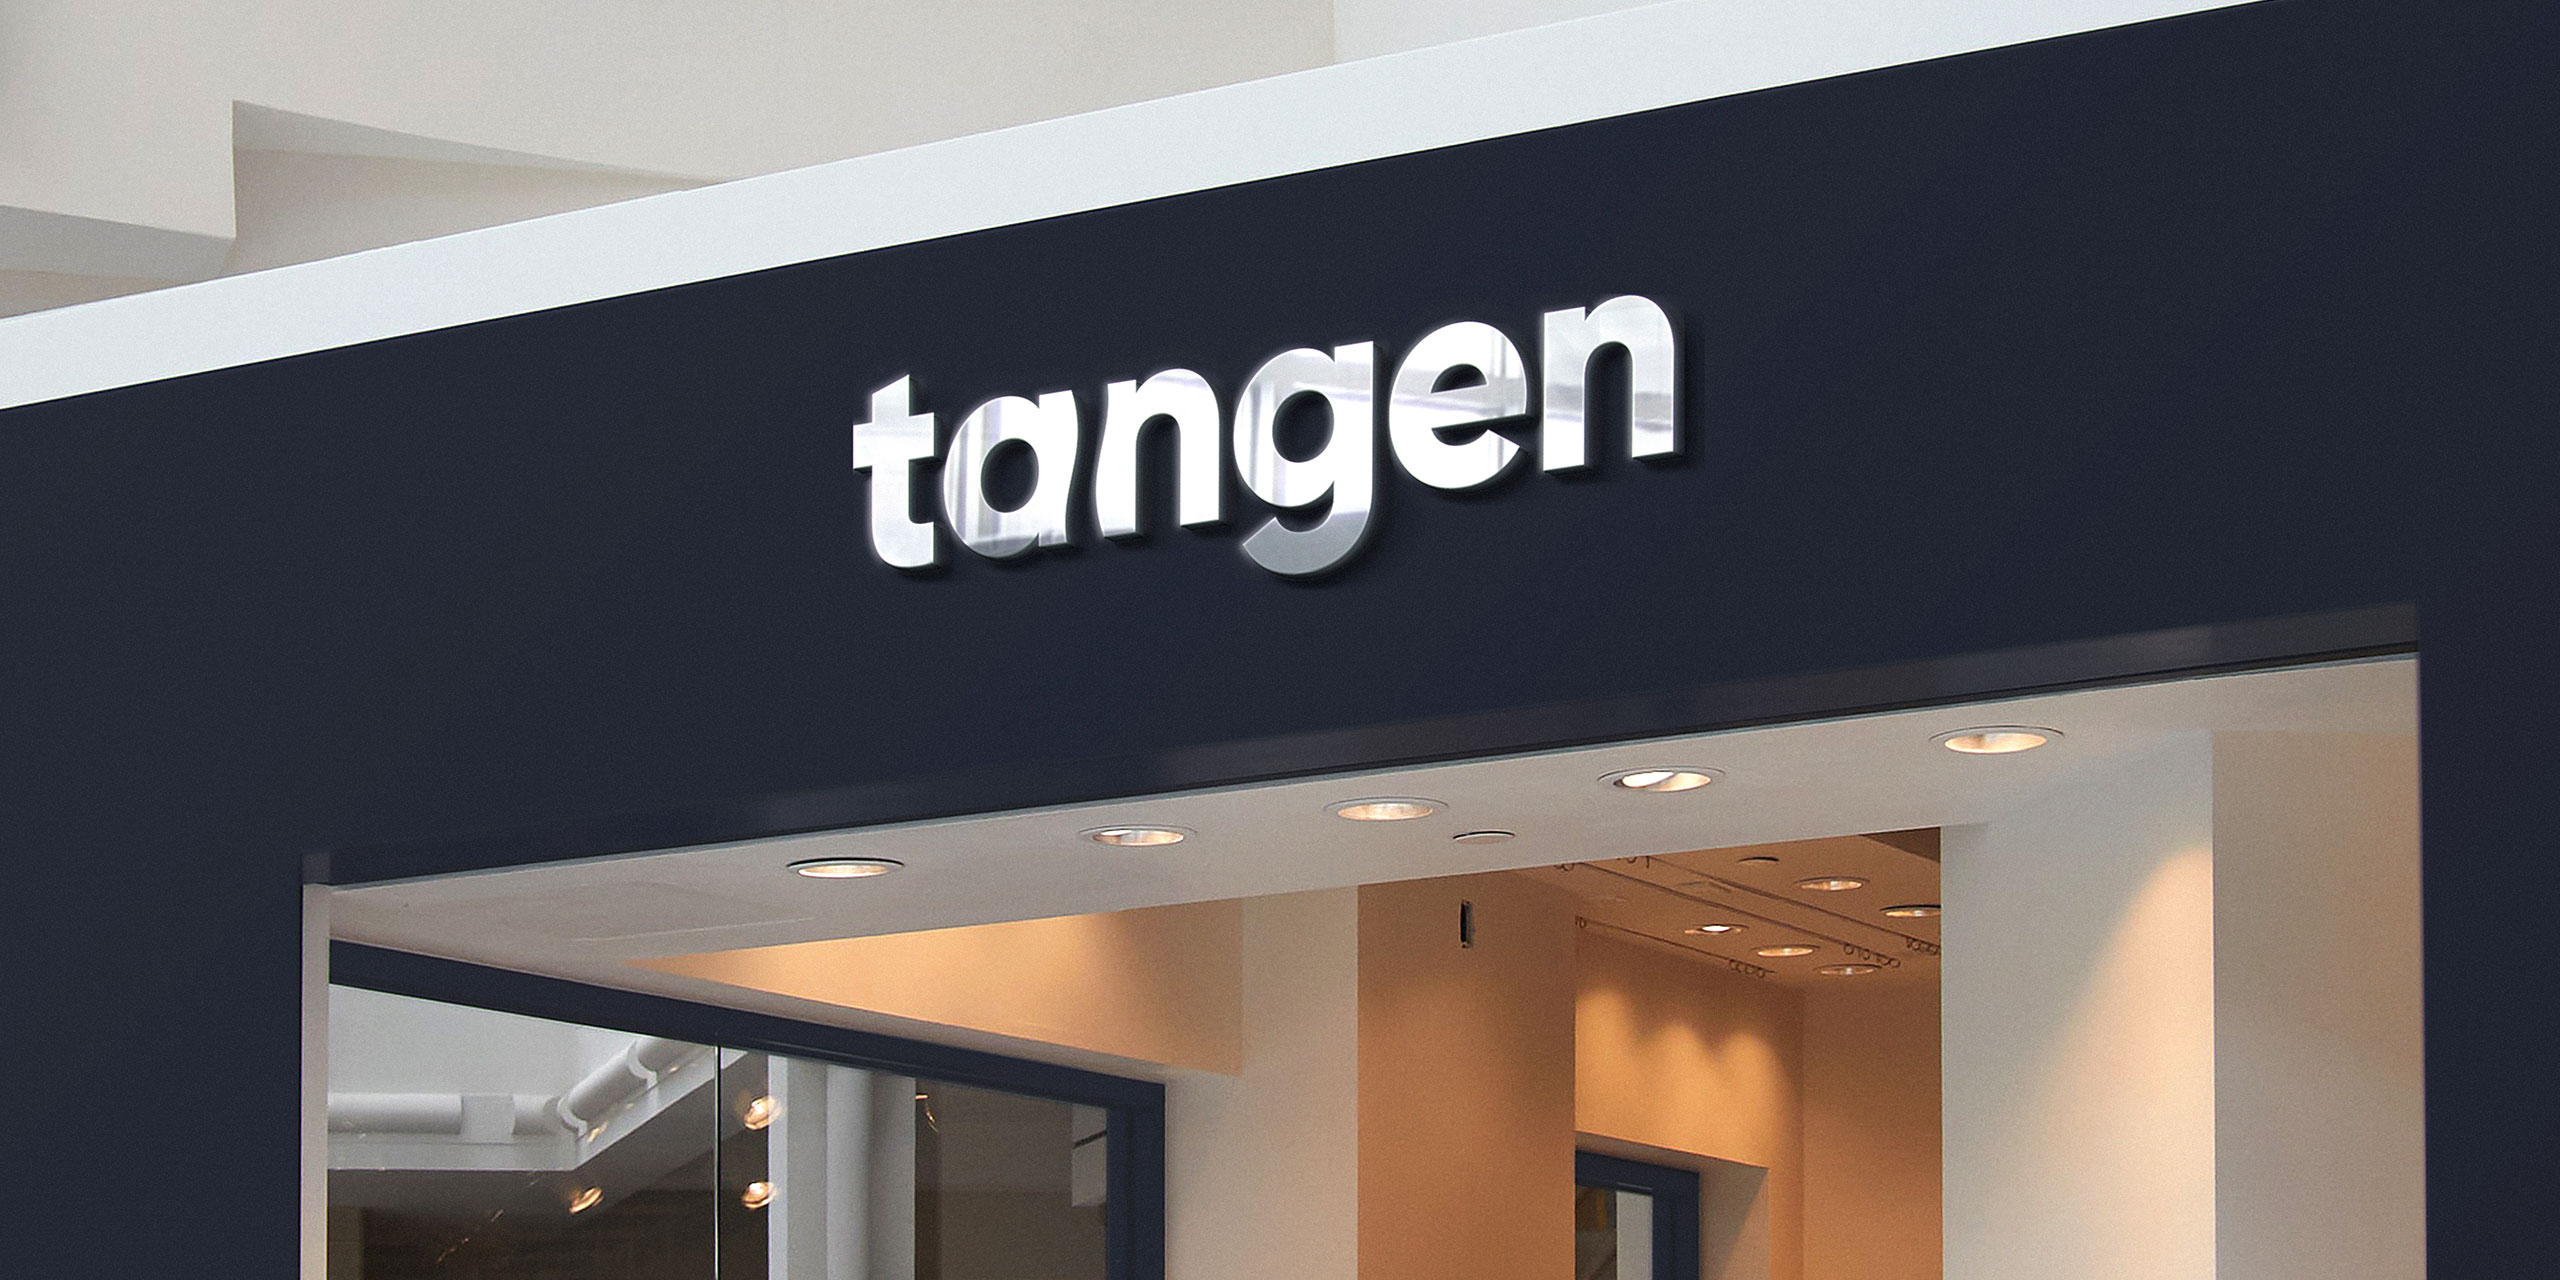 Branding Tangen